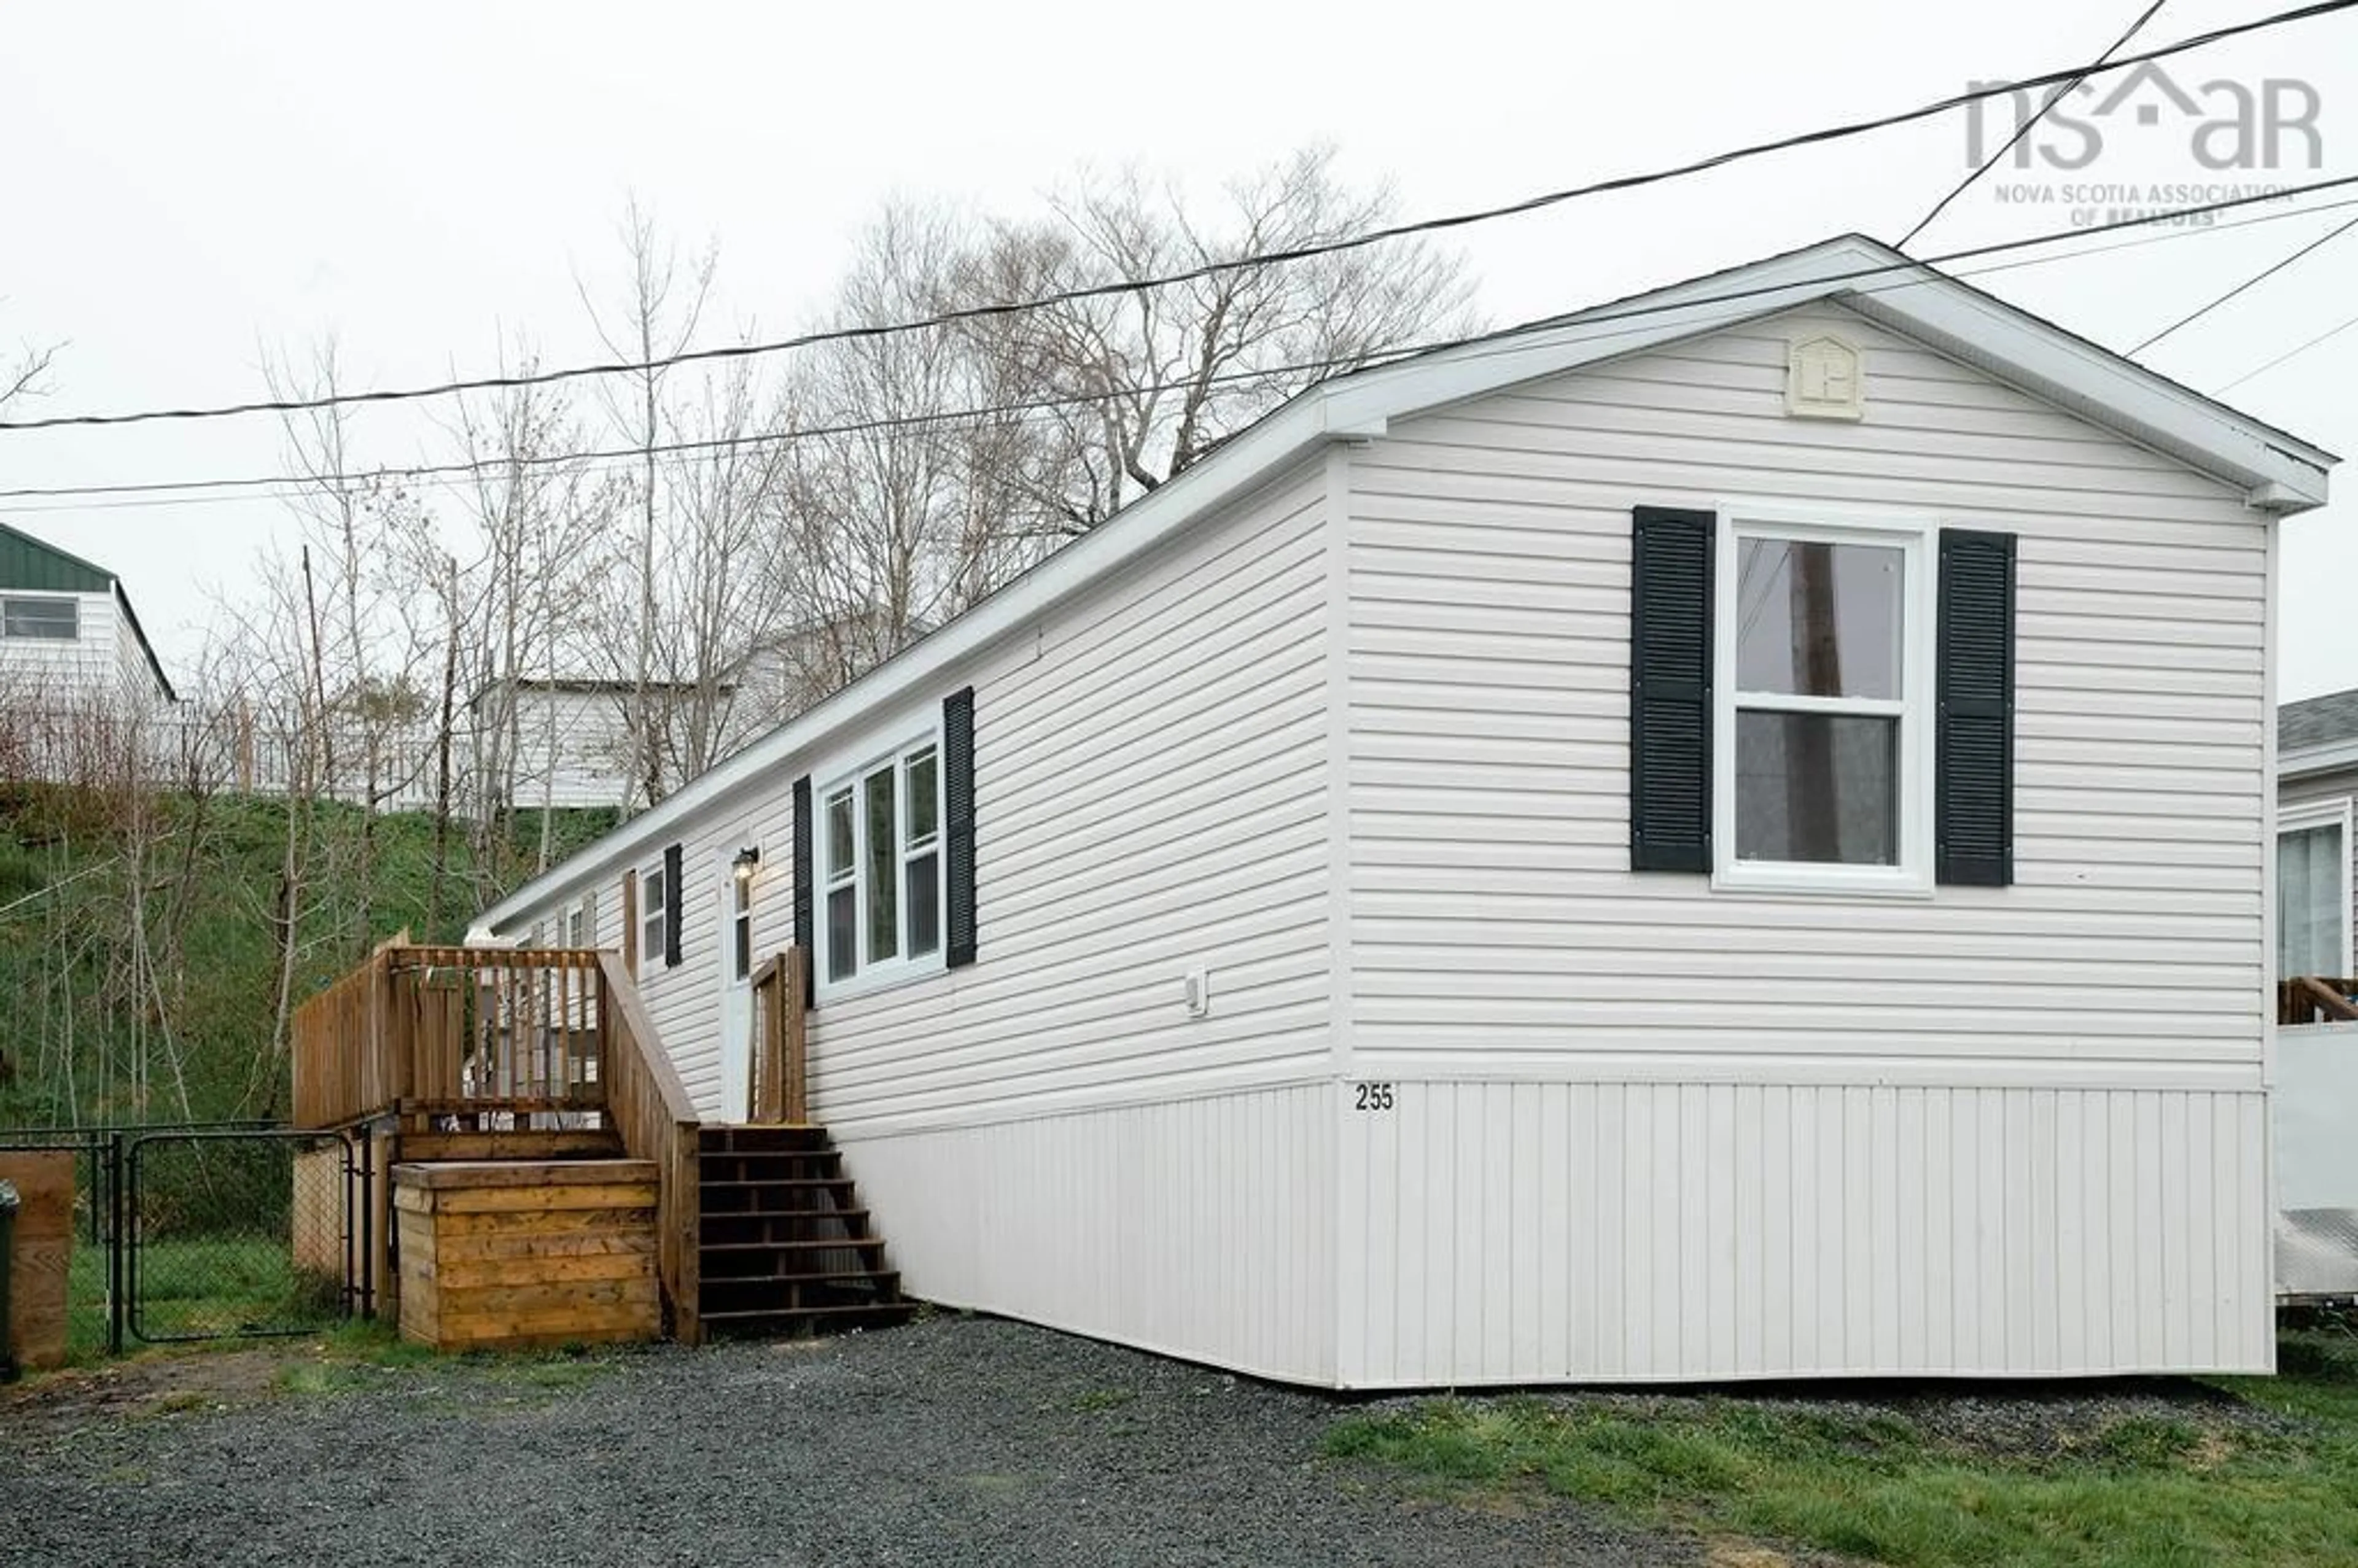 Home with vinyl exterior material for 255 Parklane Dr, Lower Sackville Nova Scotia B4C 2X2